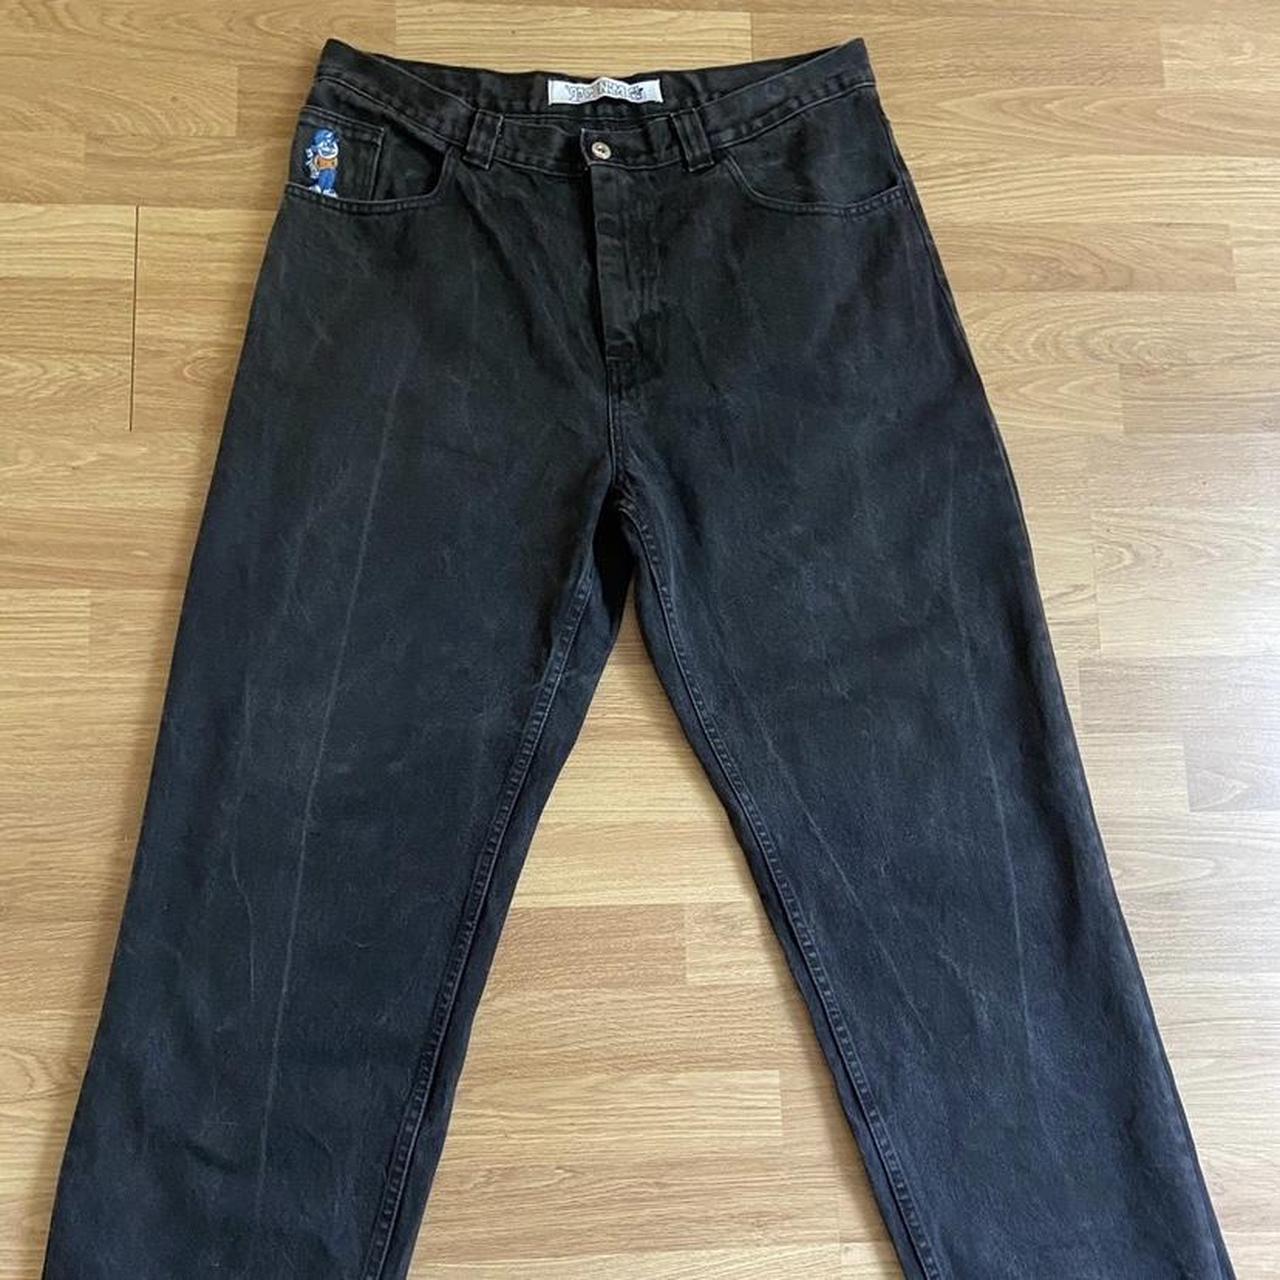 Product Image 1 - Polar Big Boy 93 Jeans
condition